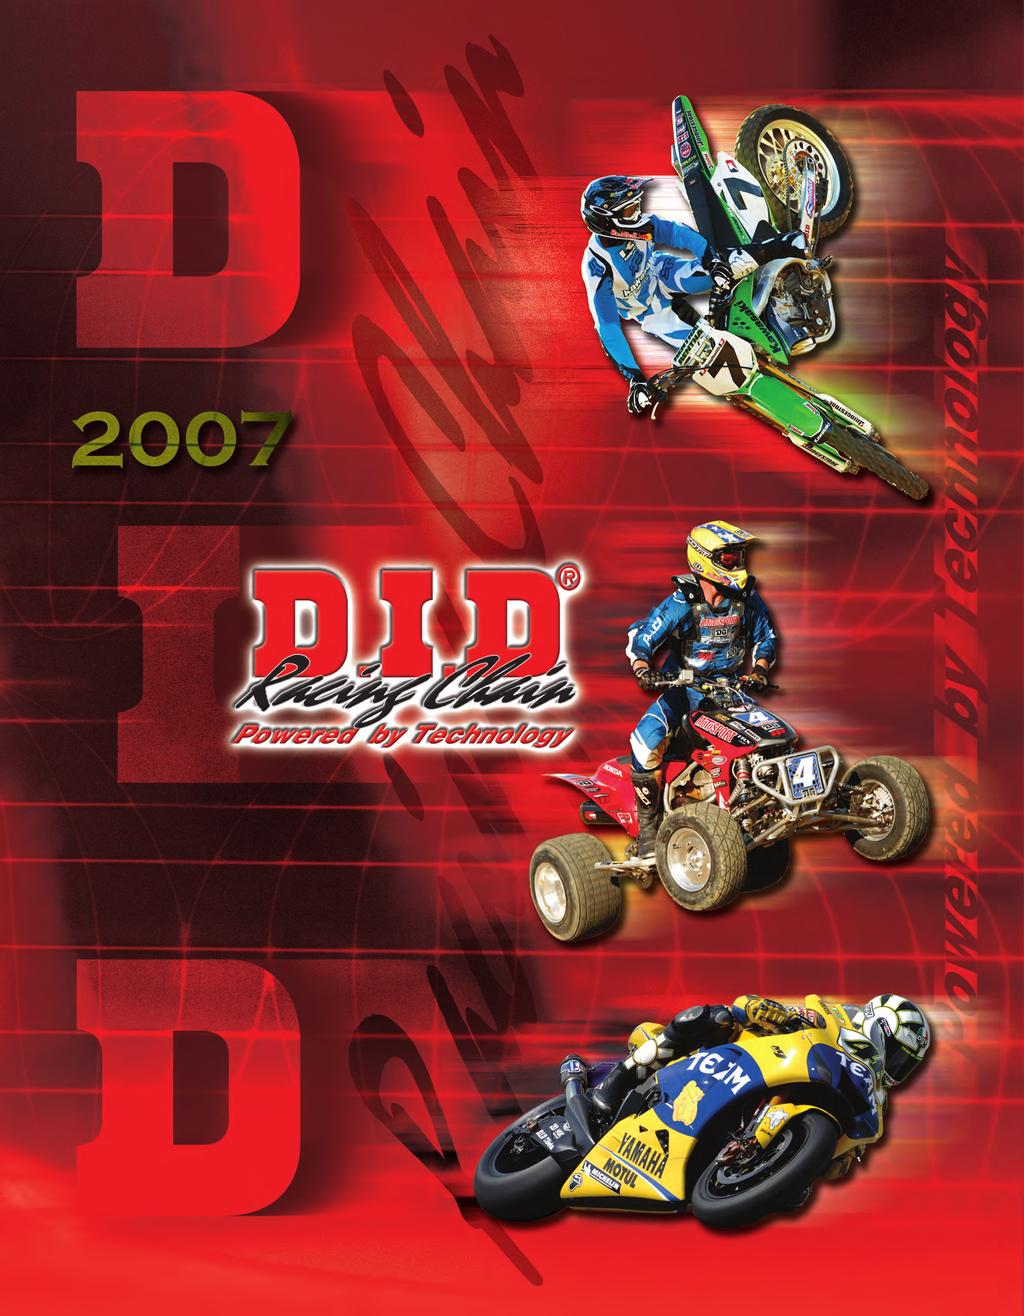 EUR_DID_Broch_2007_FIAL 4/5/07 6:46 AM Page 1 JAMES STEWART Team Kawasaki 2006 World Supercross GP Series